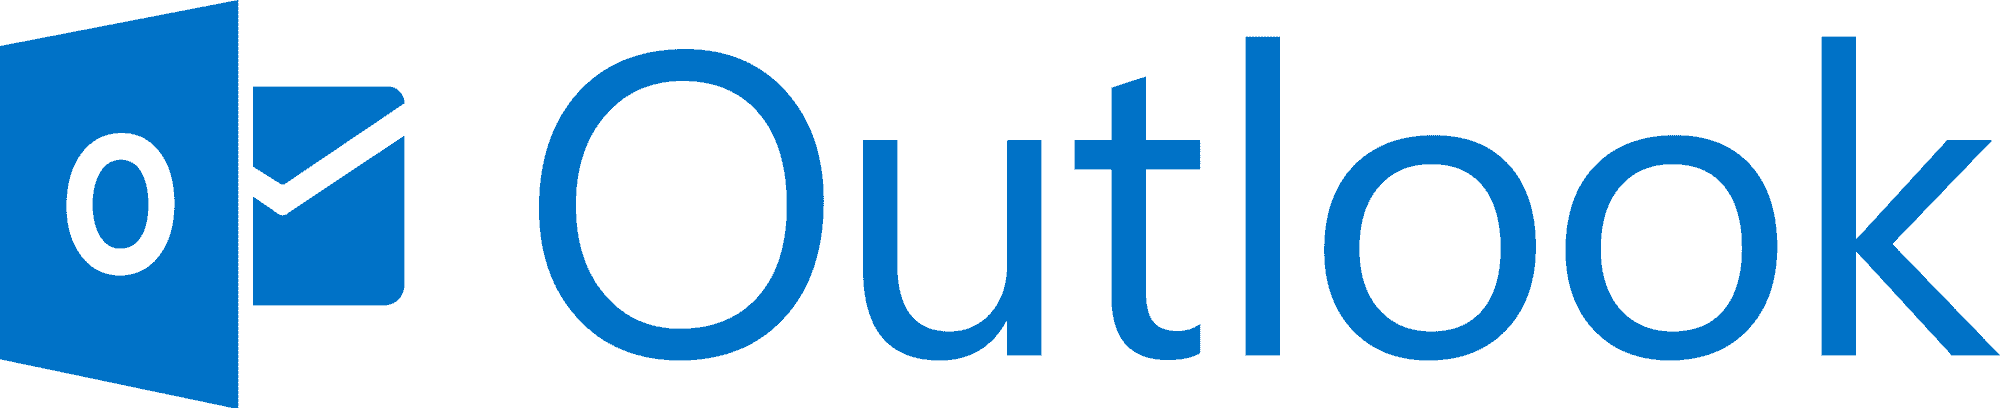 Outlook logo and wordmark.svg